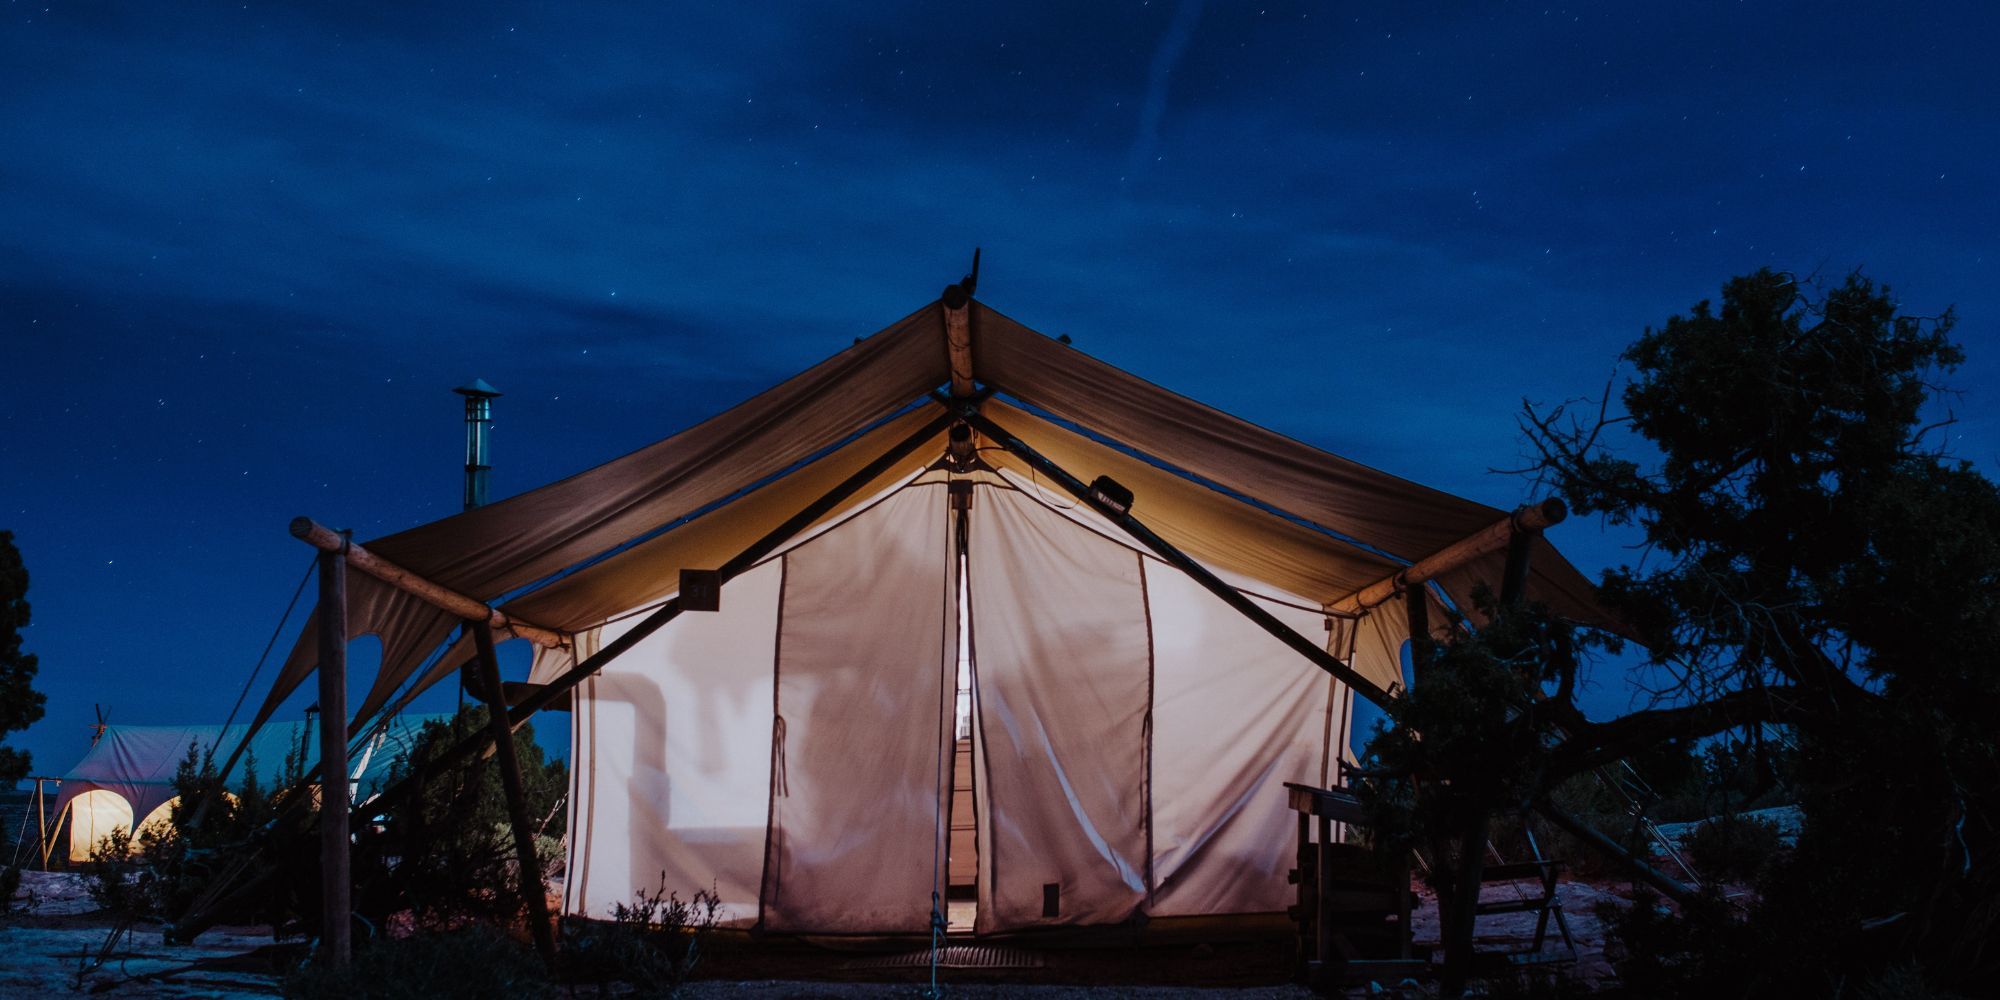 8 person tent